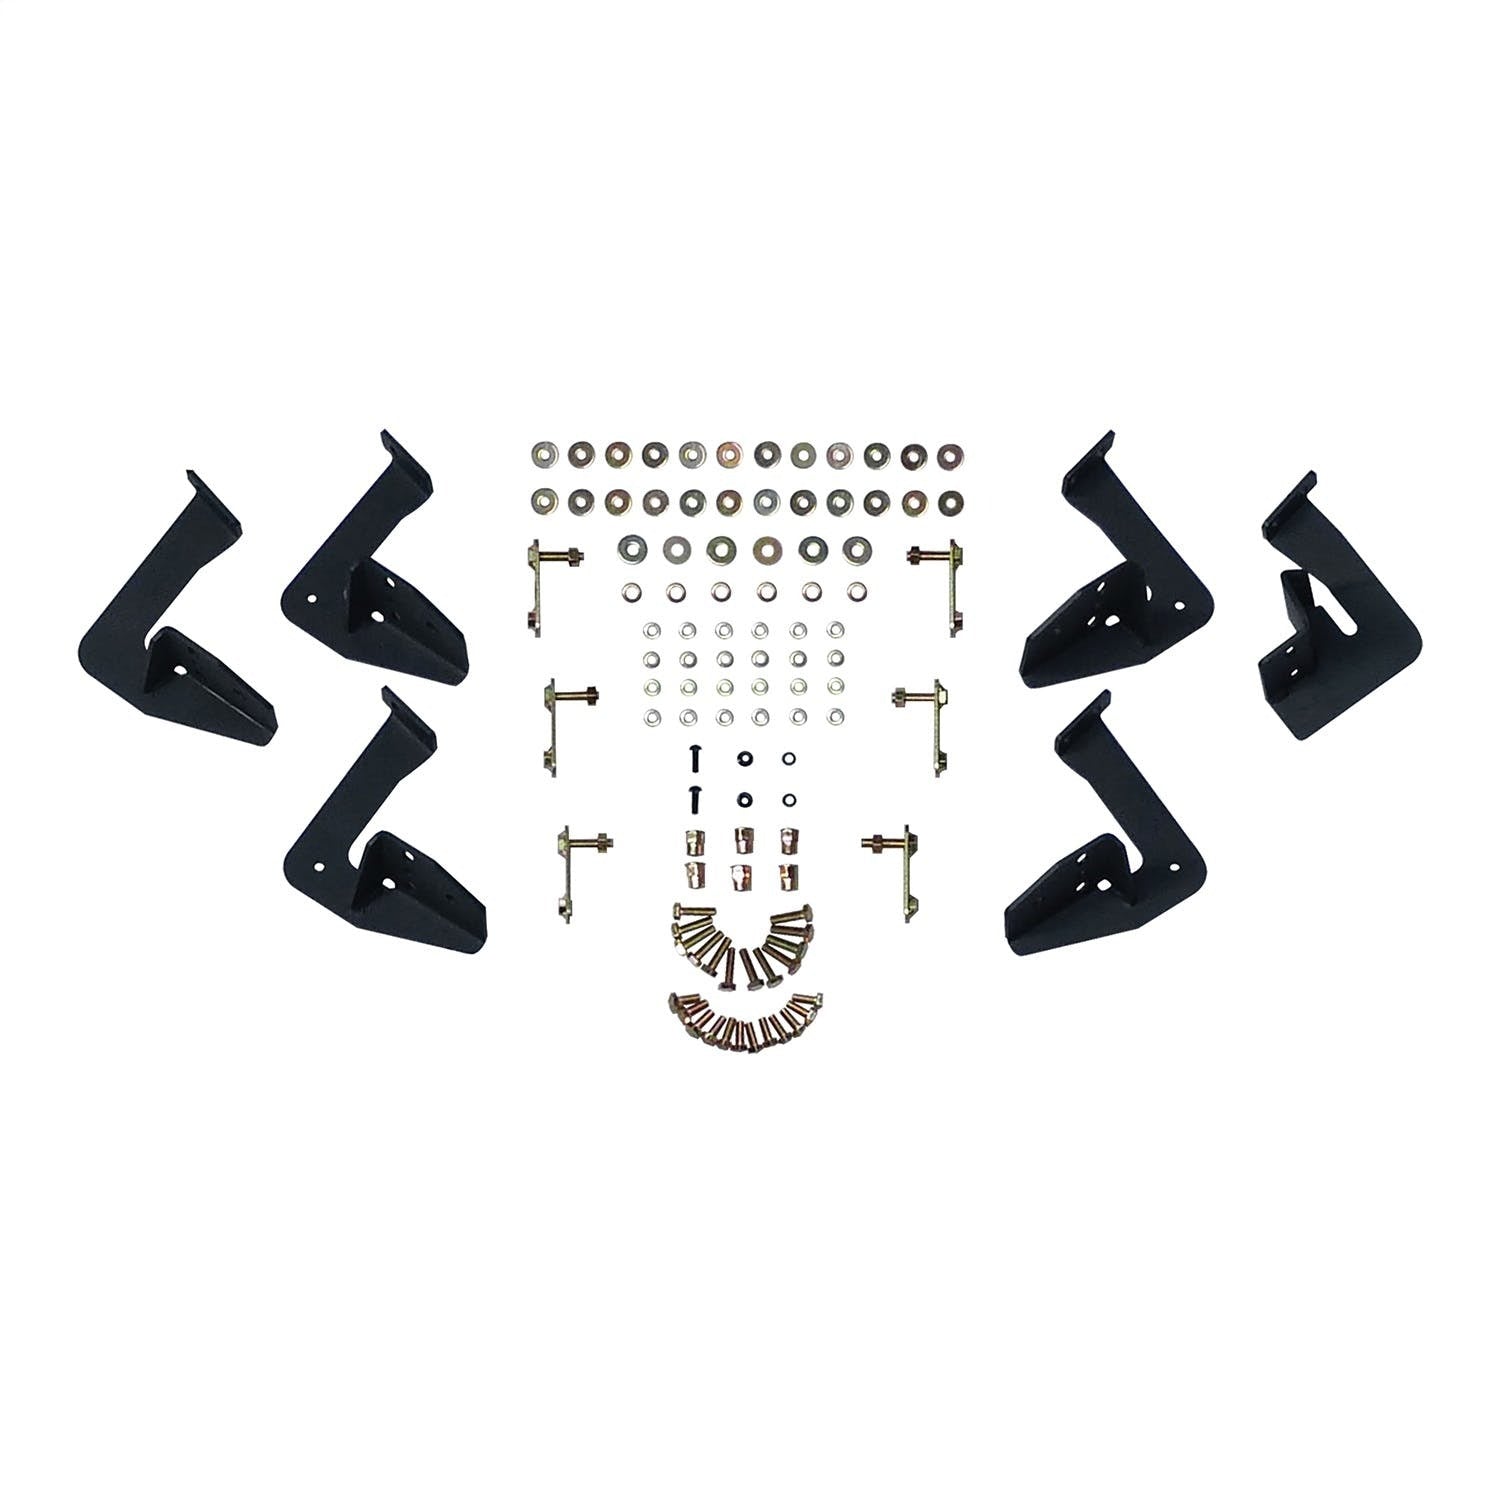 Westin Automotive 56-135652 HDX Stainless Drop Nerf Step Bars Textured Black